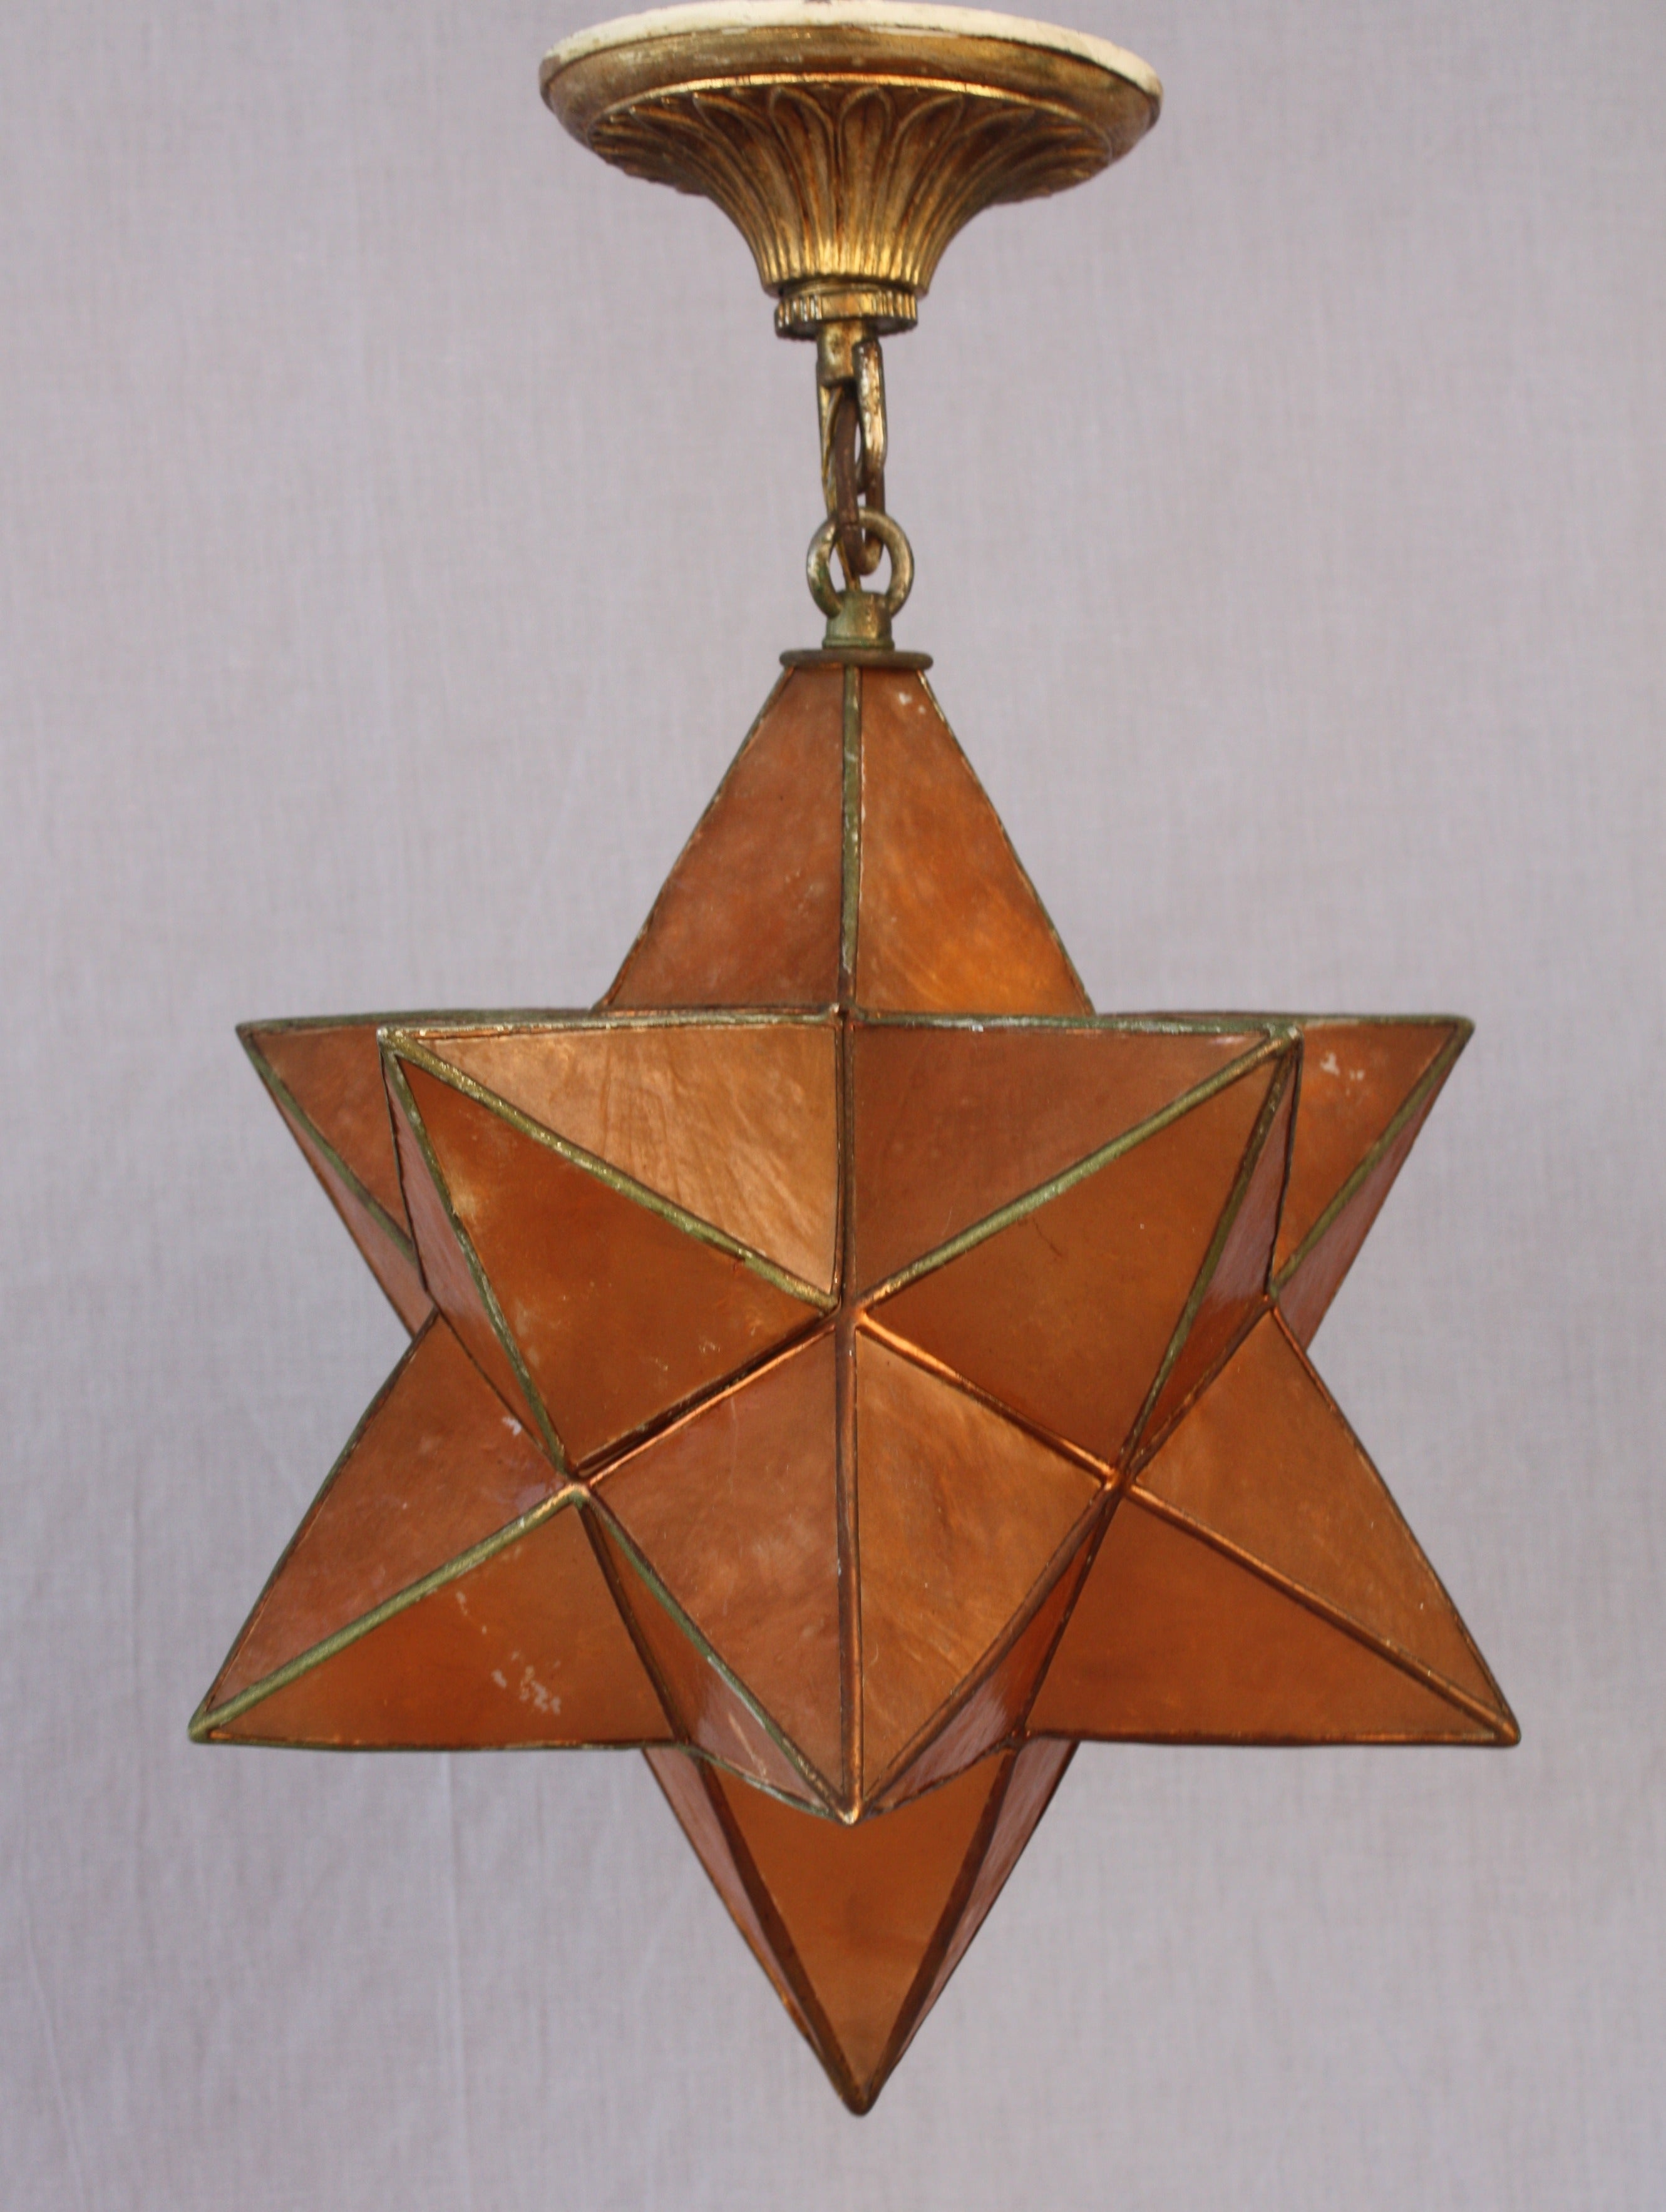 1930s Morovian Capiz Star Pendant